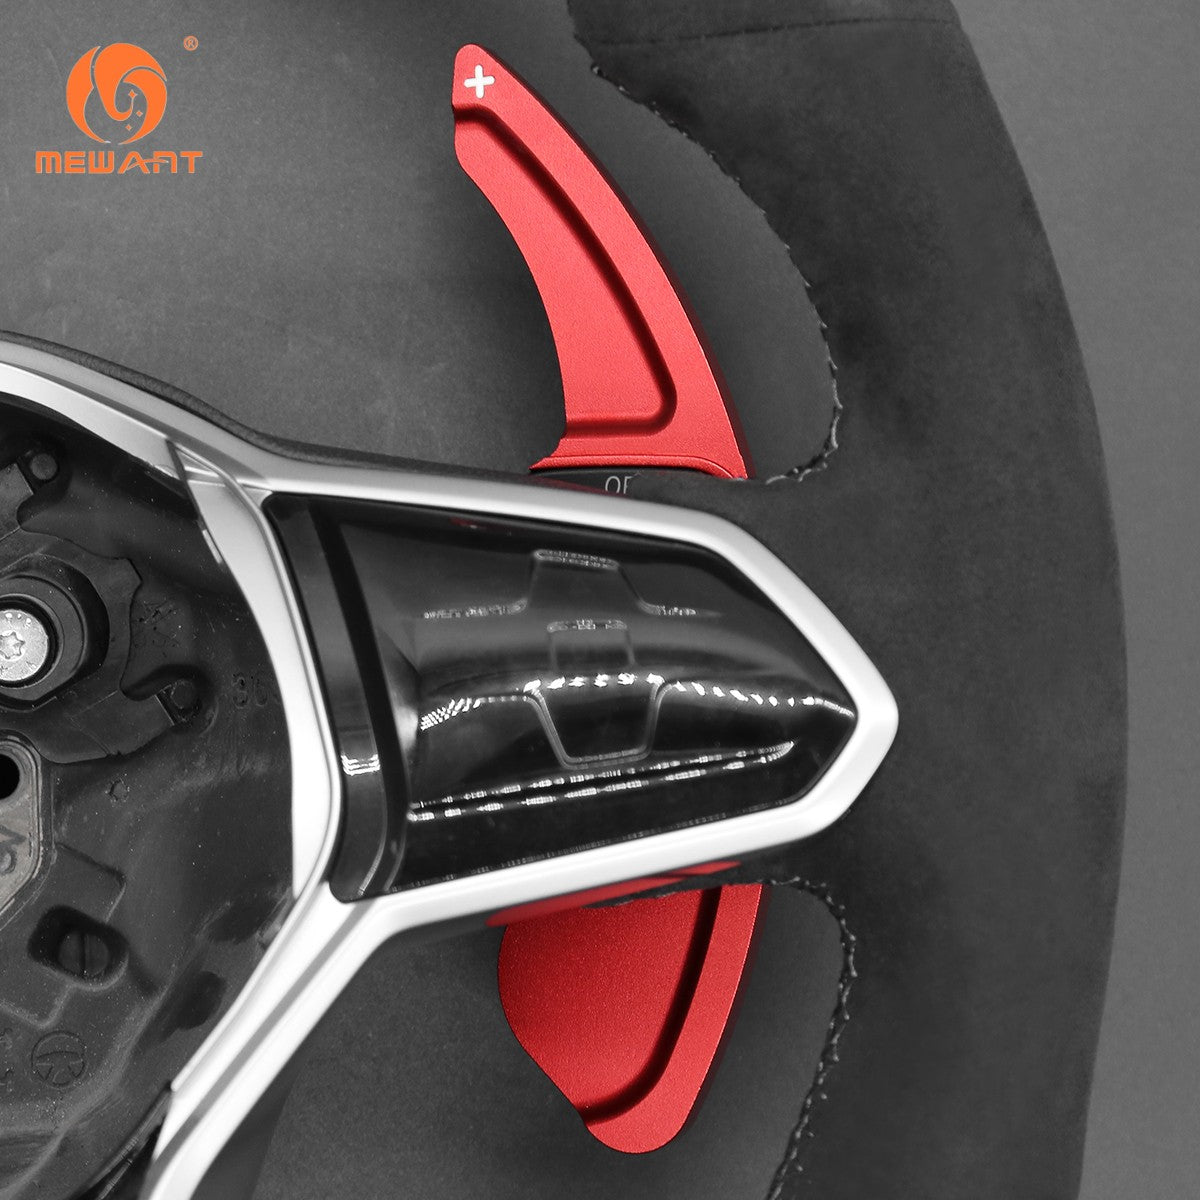 Mewant Aluminum Alloy Carbon Fiber Steering Wheel Shift Paddle for VW Golf 8 (R-Line) /Golf GTI 8 /Golf GTD 8 /Golf GTE 8 /Passat /C-TREK /Tiguan 2017-2023/Tharu /Atlas /Touareg /Phideon/Phideon Phev /CC /Sharan